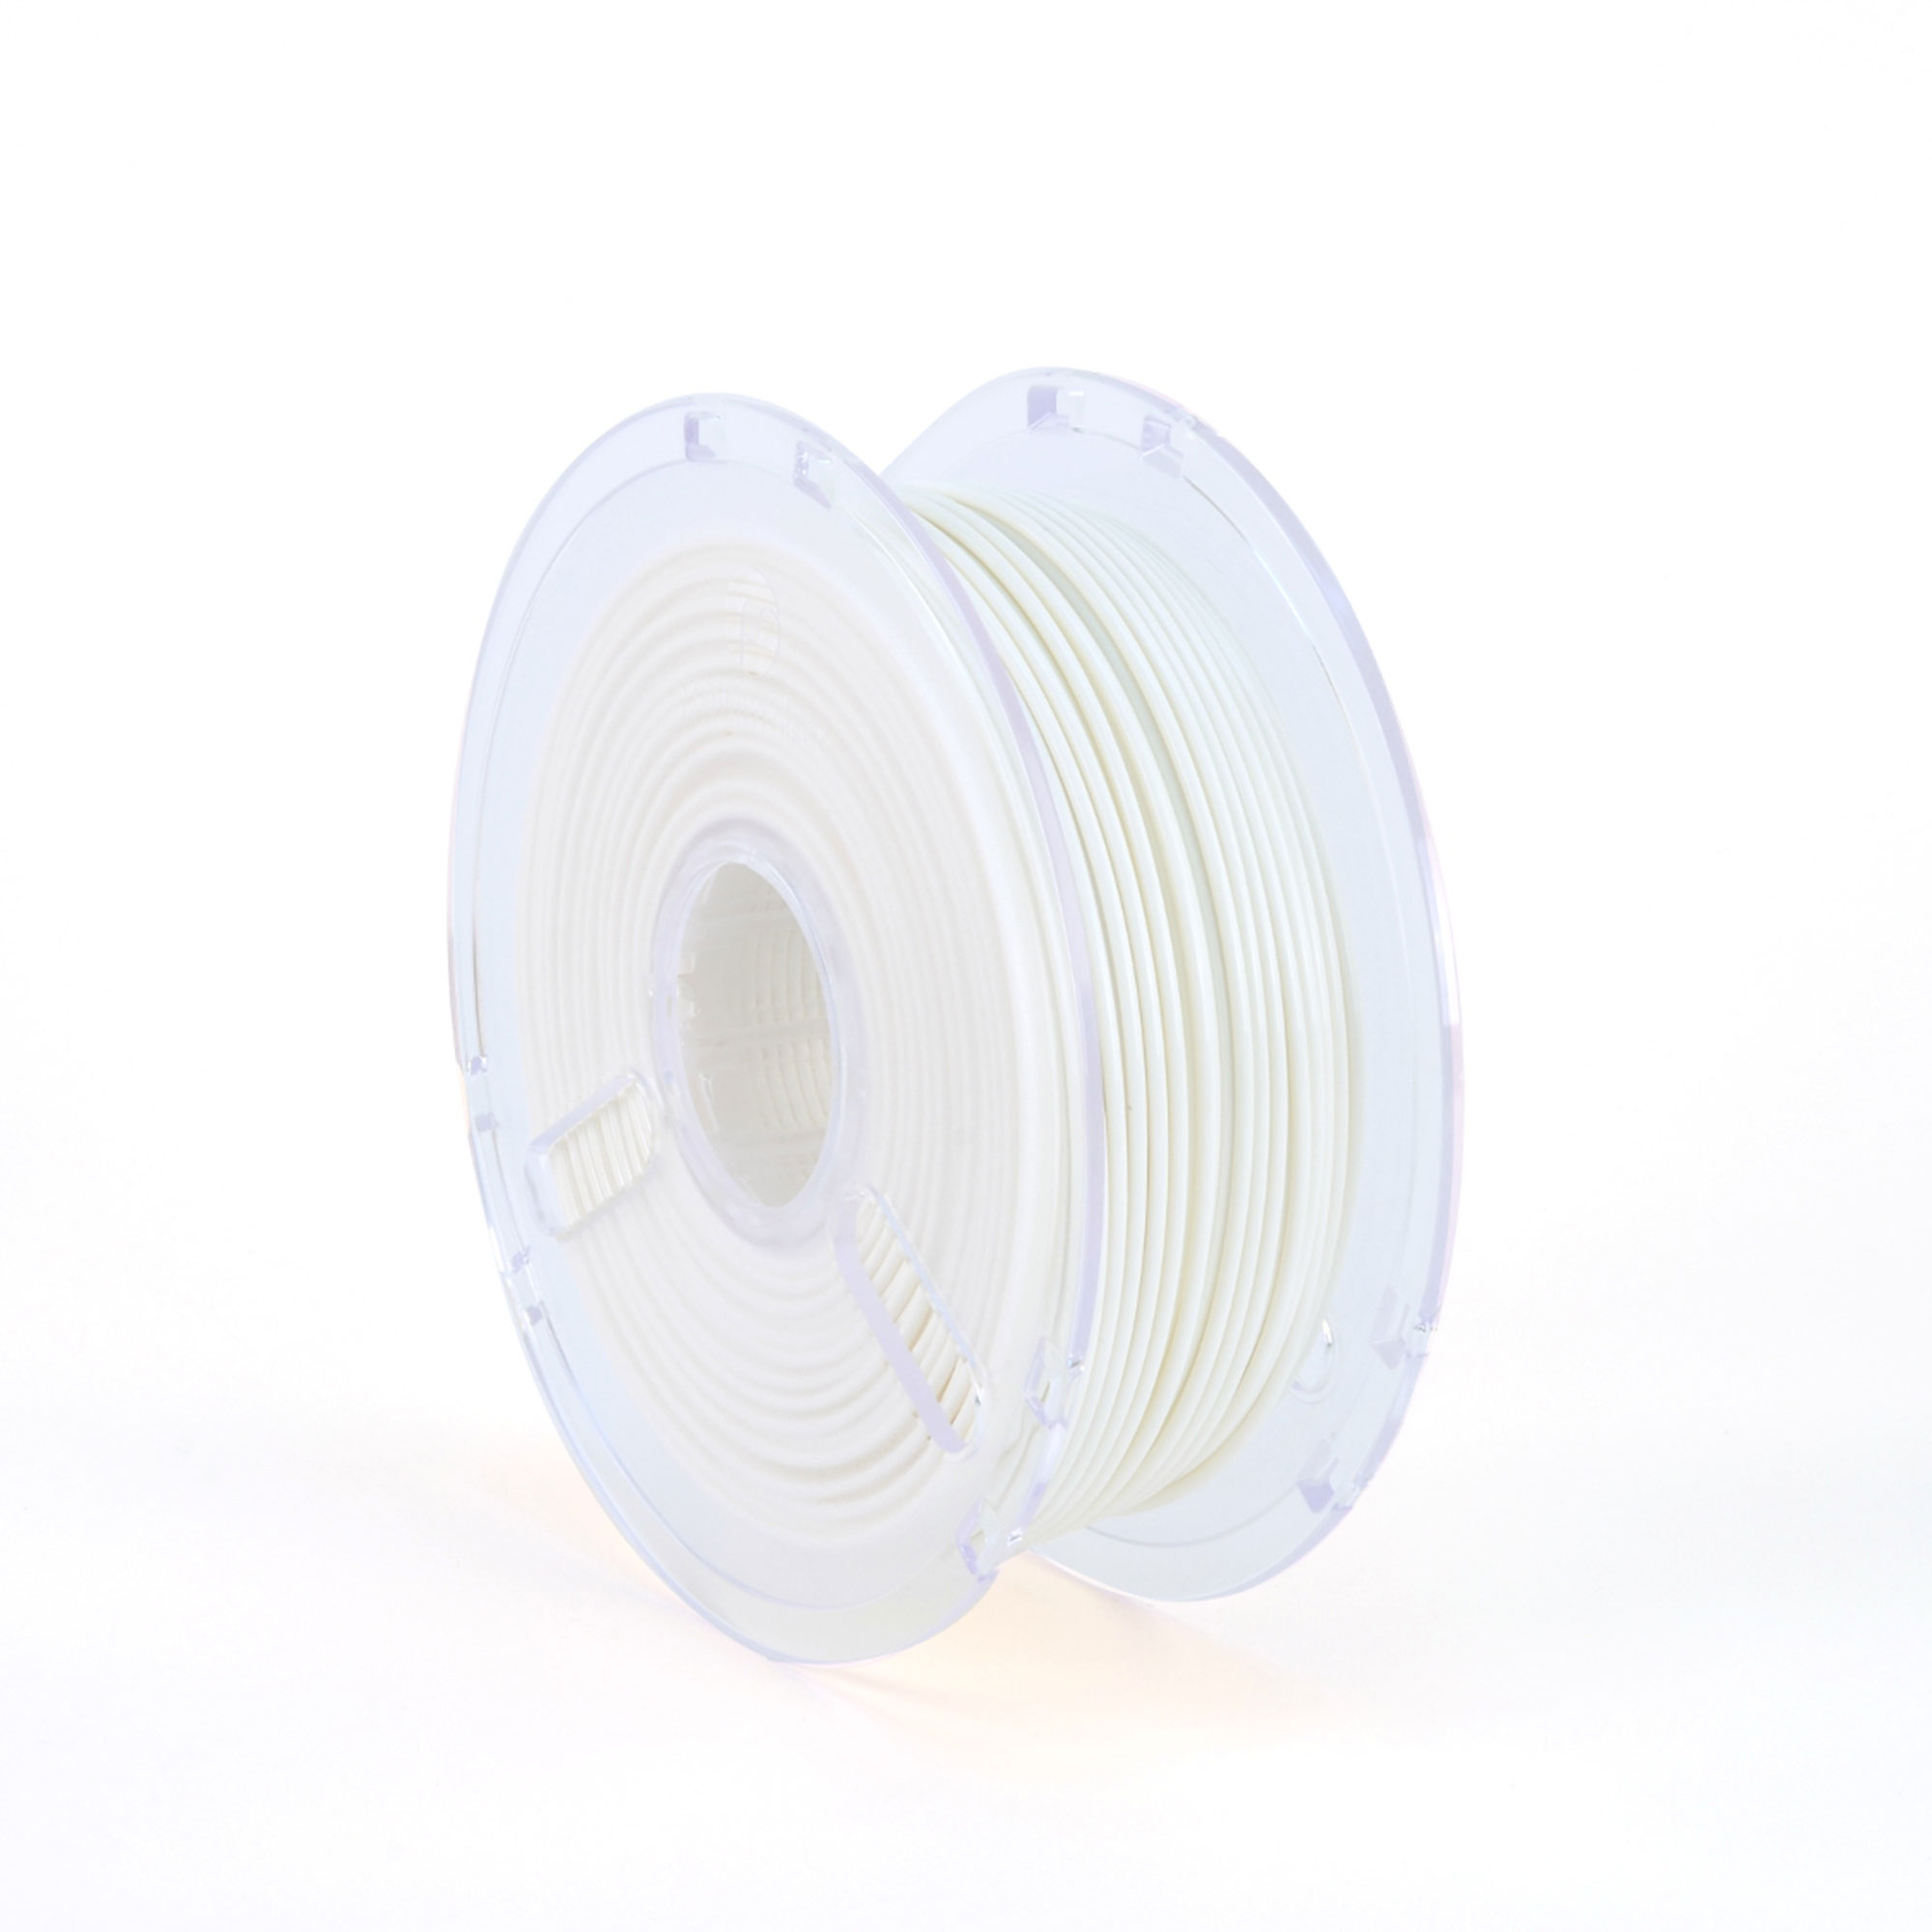 3d Printer Filament True White 2.85mm 1kg Reel